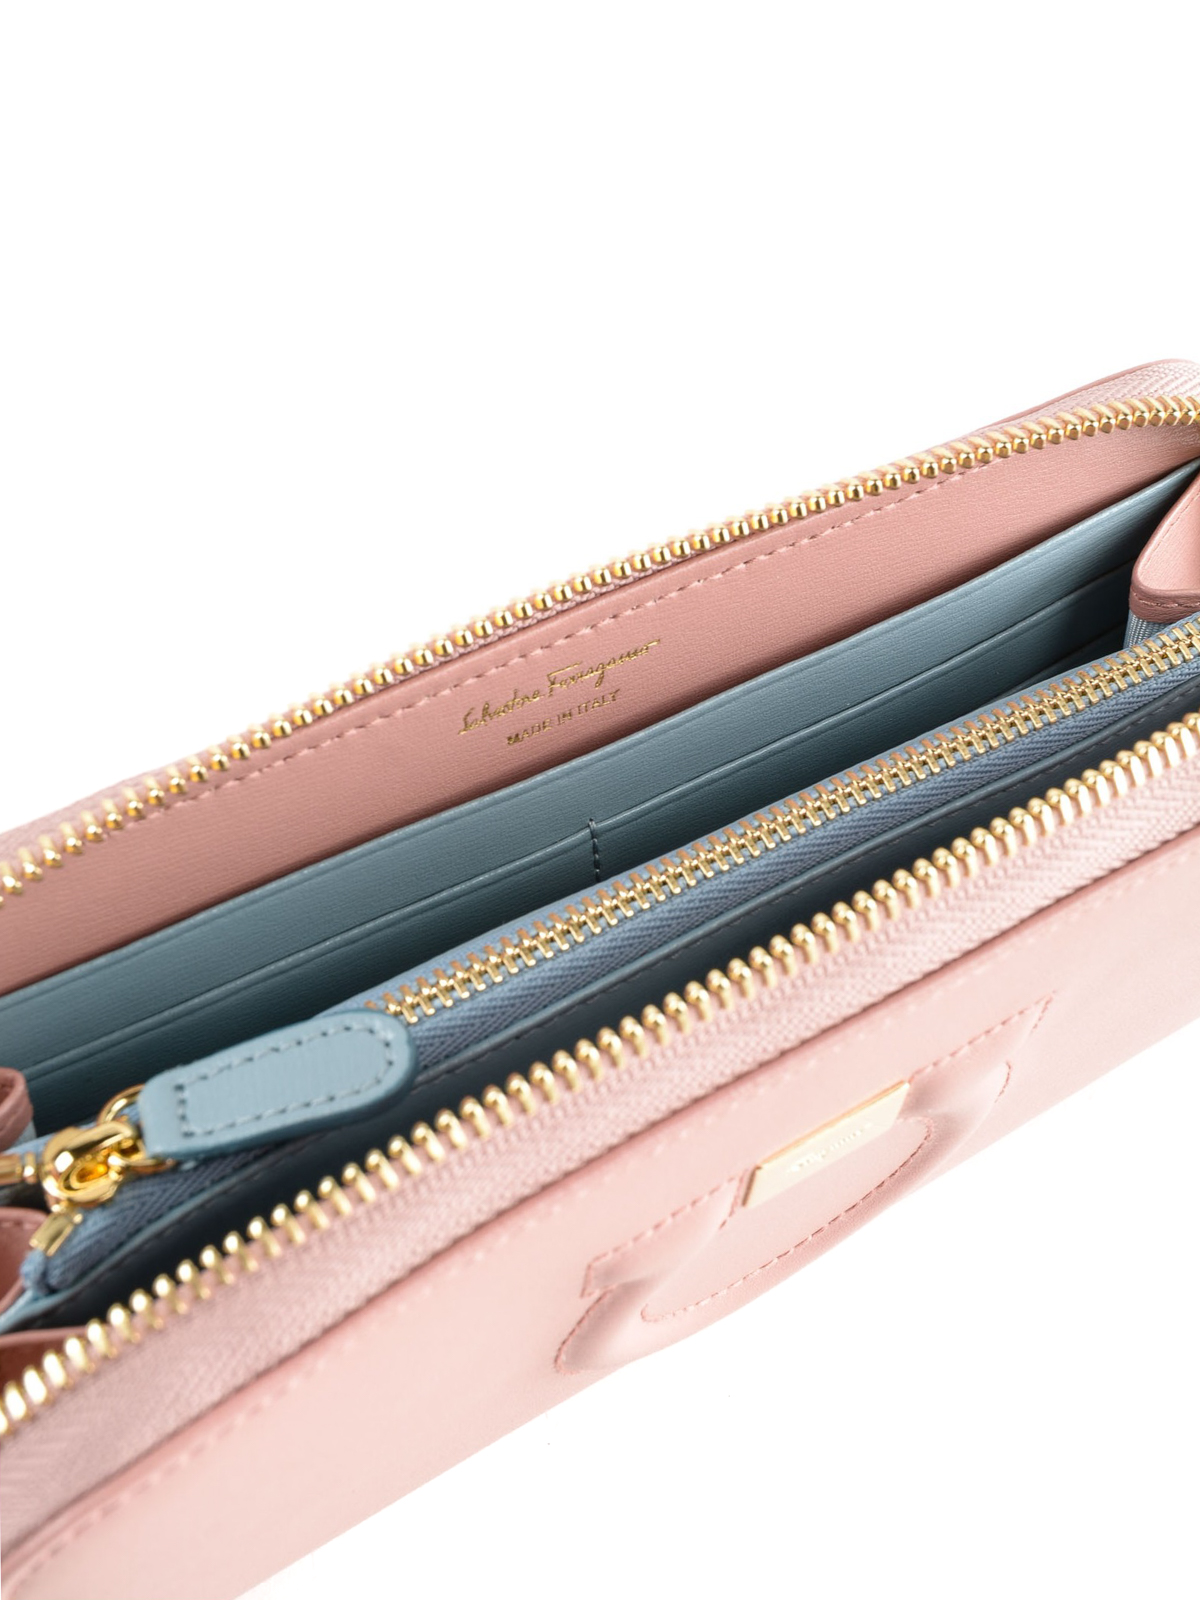 Wallets & purses Salvatore Ferragamo - Gancini pink leather wallet -  22C827695899